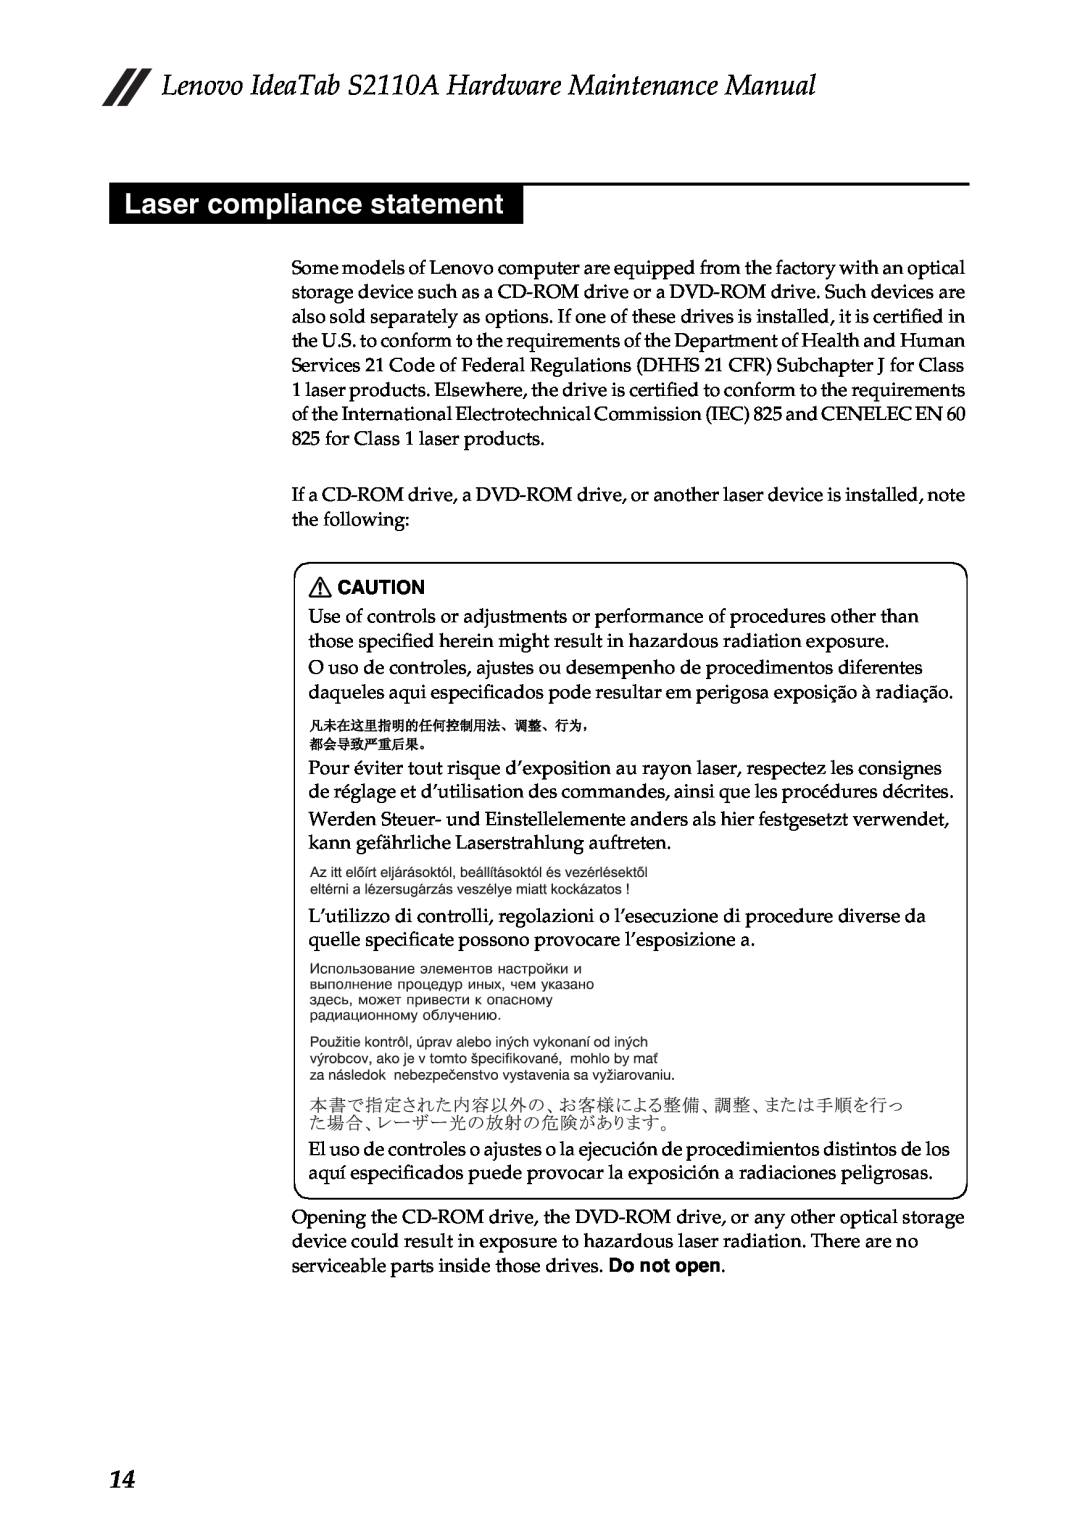 Lenovo manual Laser compliance statement, Lenovo IdeaTab S2110A Hardware Maintenance Manual 